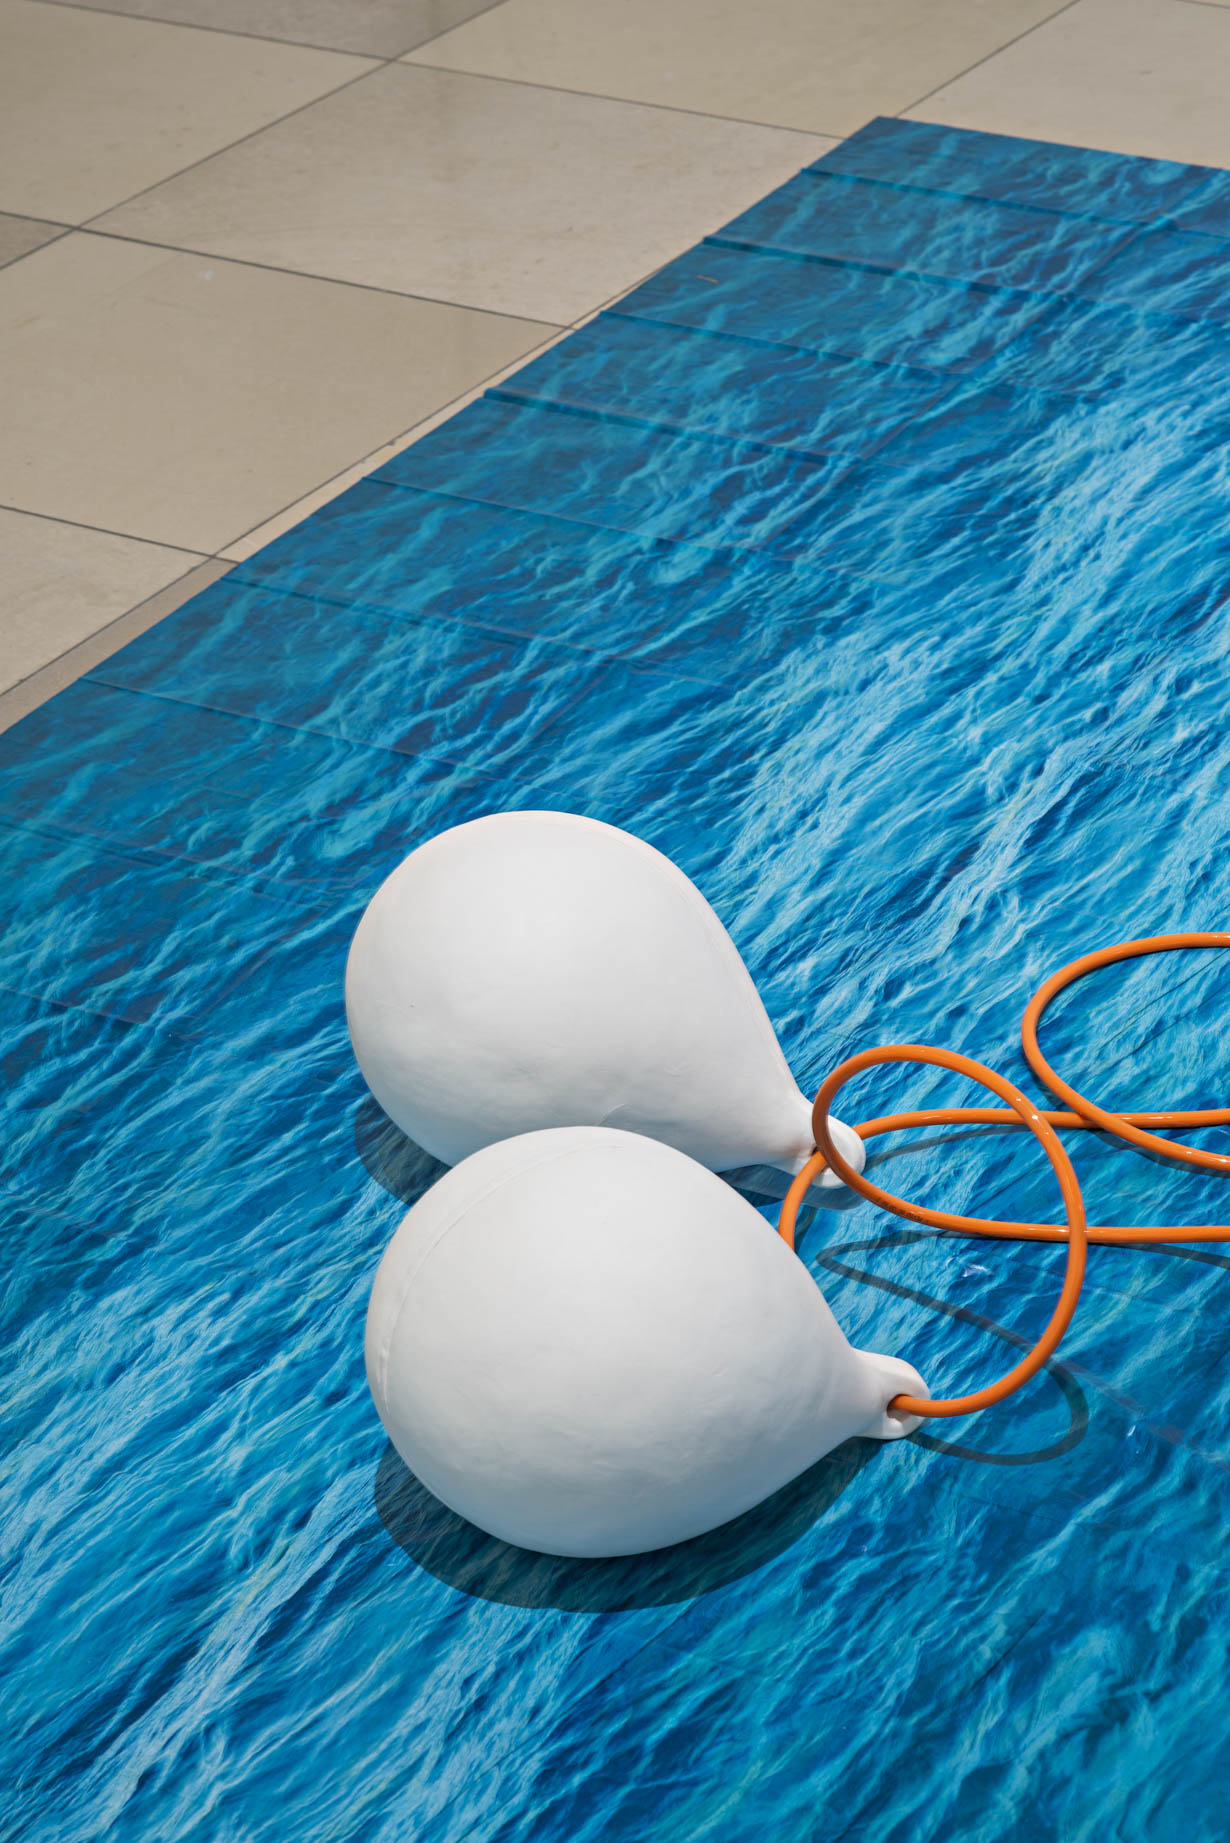 Judith Adelmann-oh buoy-glazed ceramics-installation